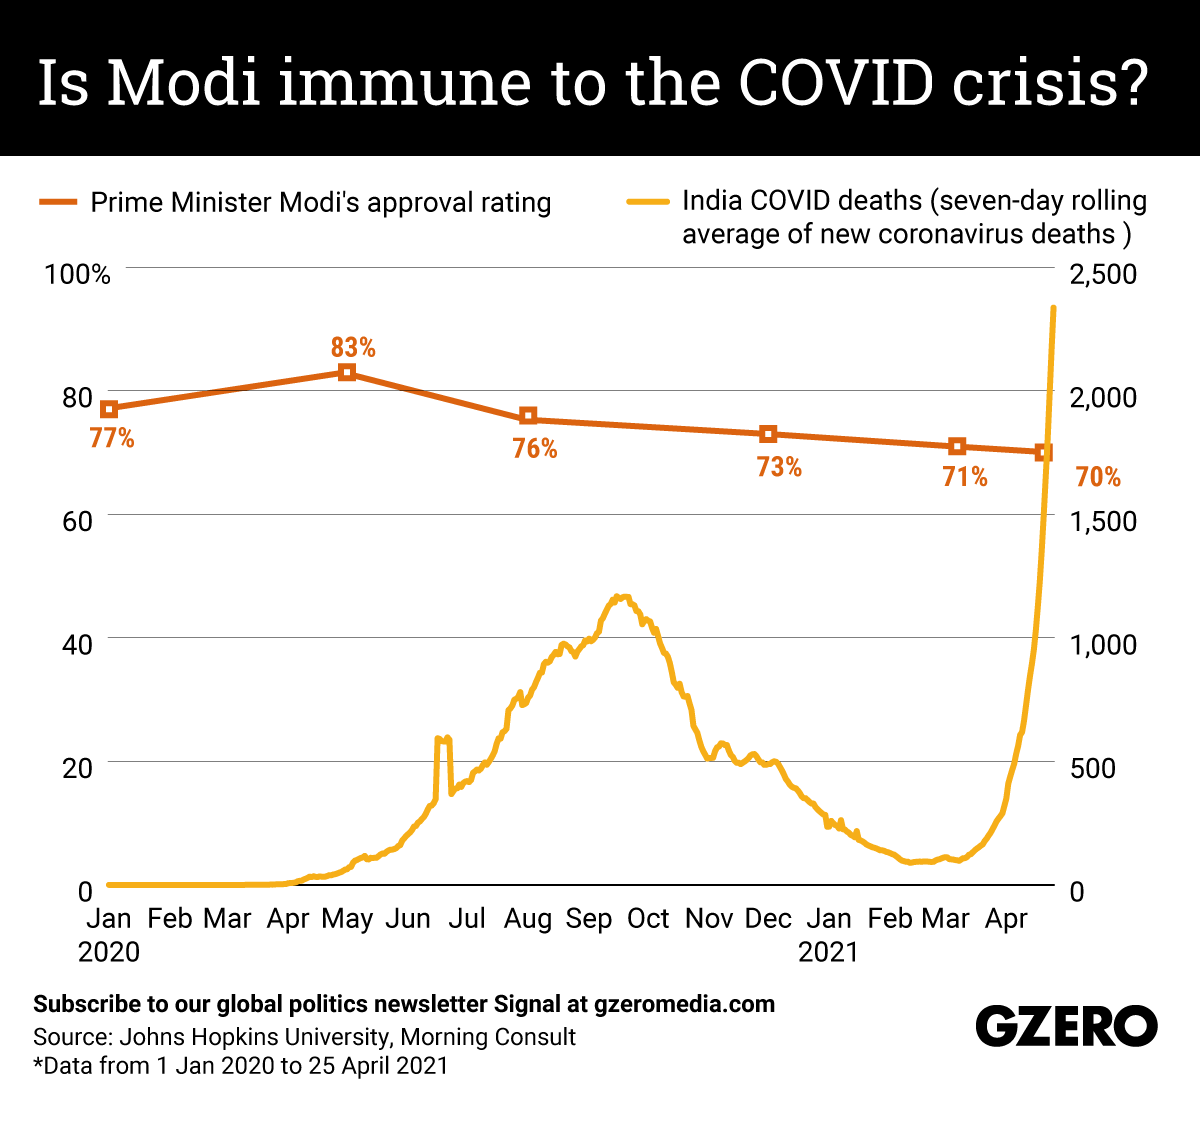 The Graphic Truth: Is Modi immune to the COVID crisis?